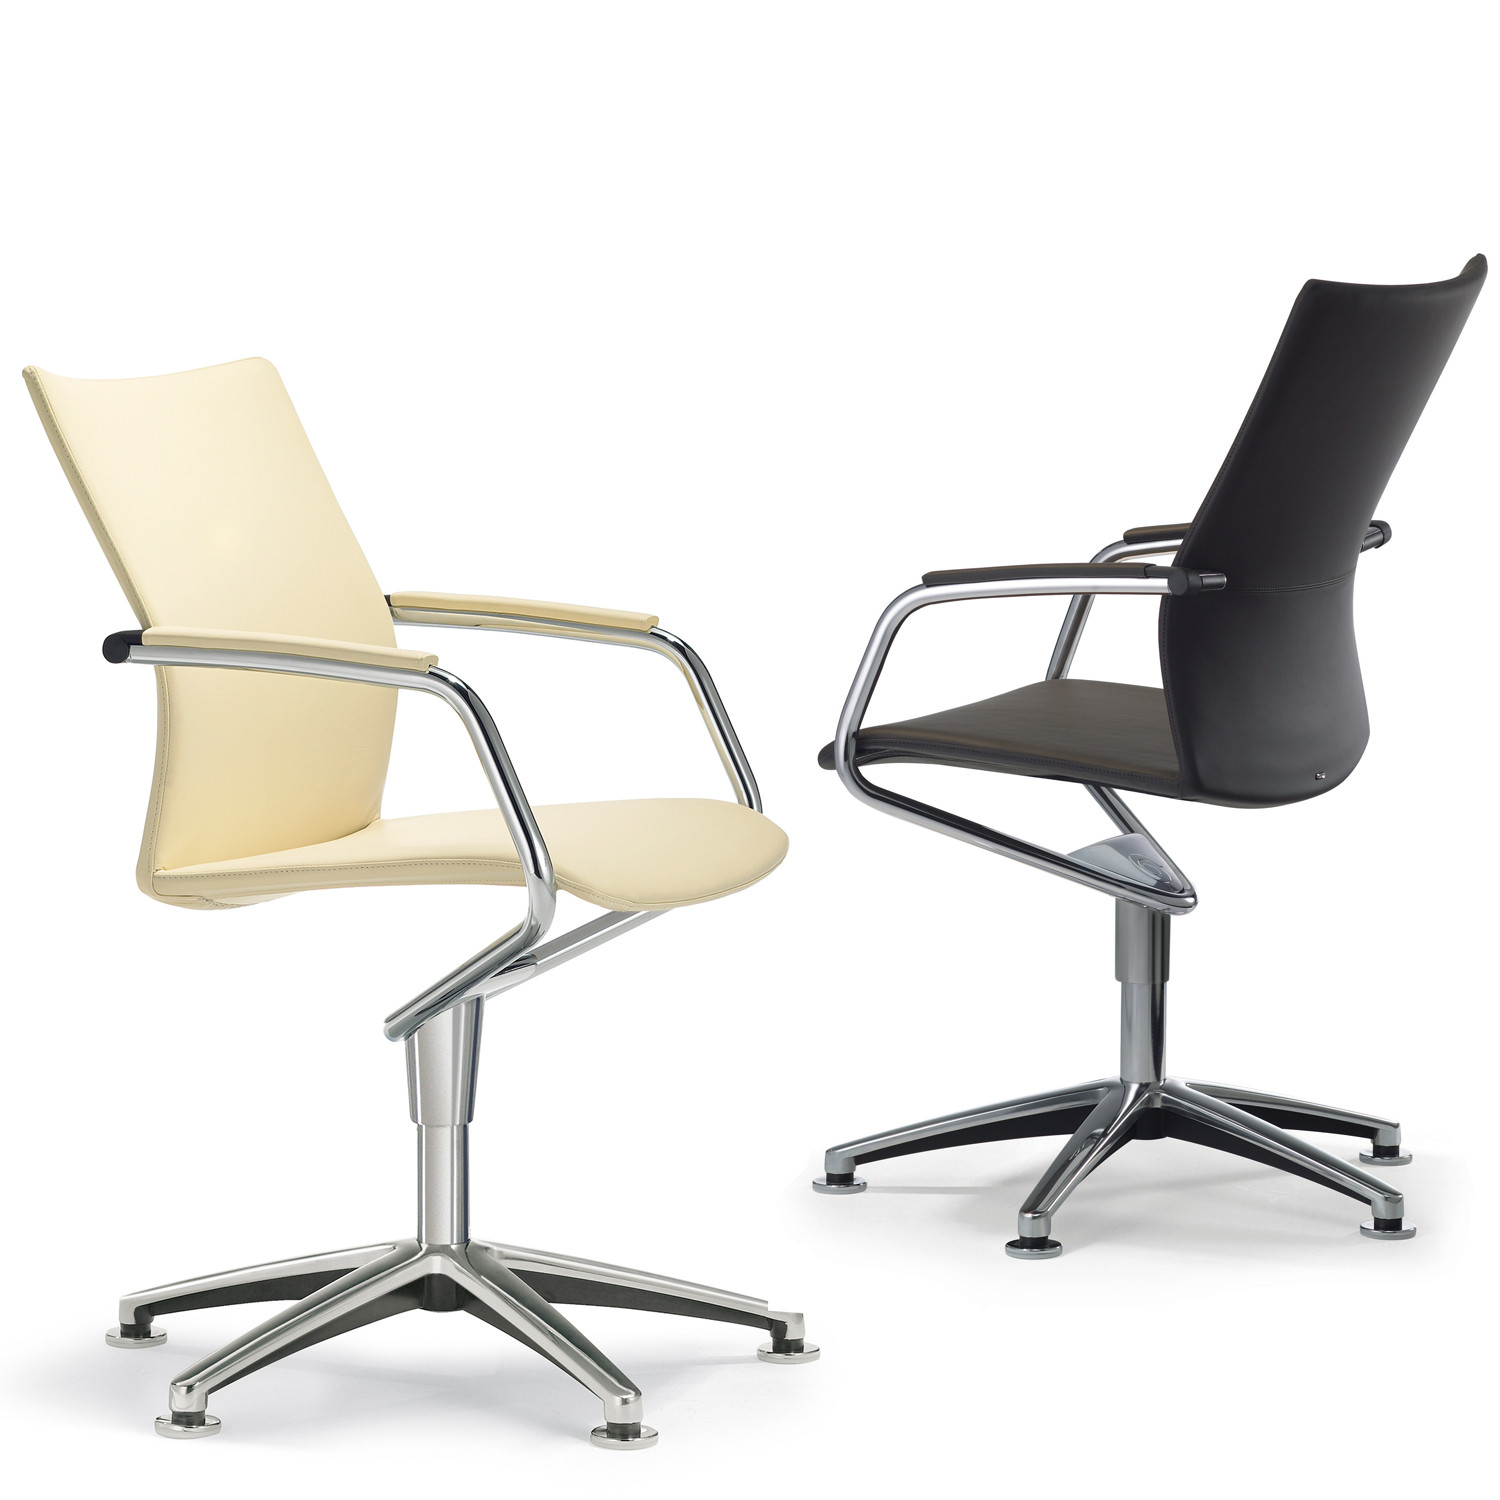 Ciello Office Swivel Chairs